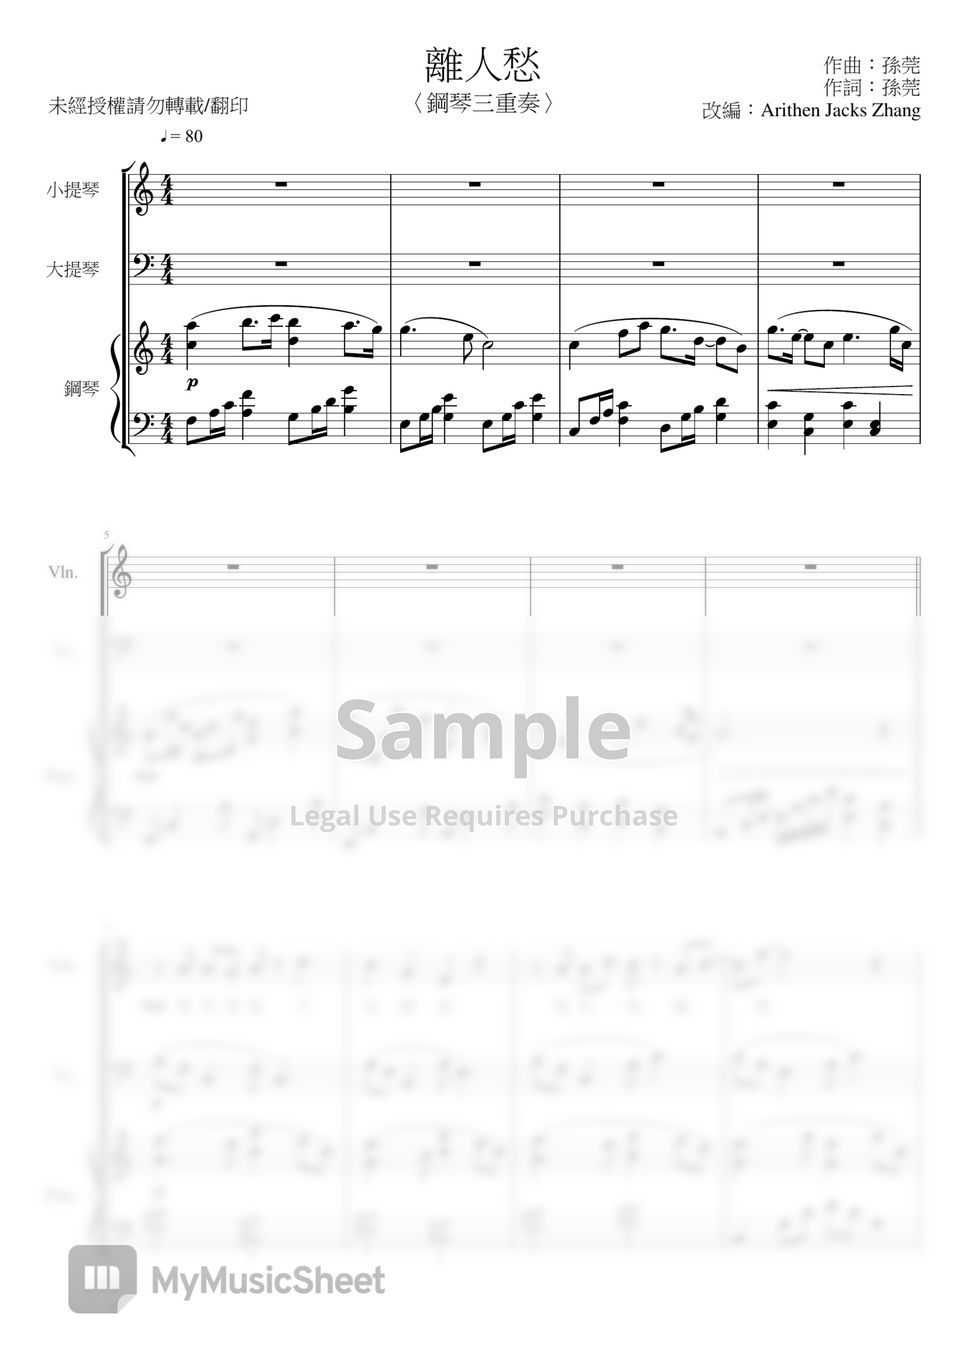 劉增瞳 (Liu Zengtong) - 離人愁 (Legacy) (Piano trio) by 紫艾 (Arithen Jacks Zhang)